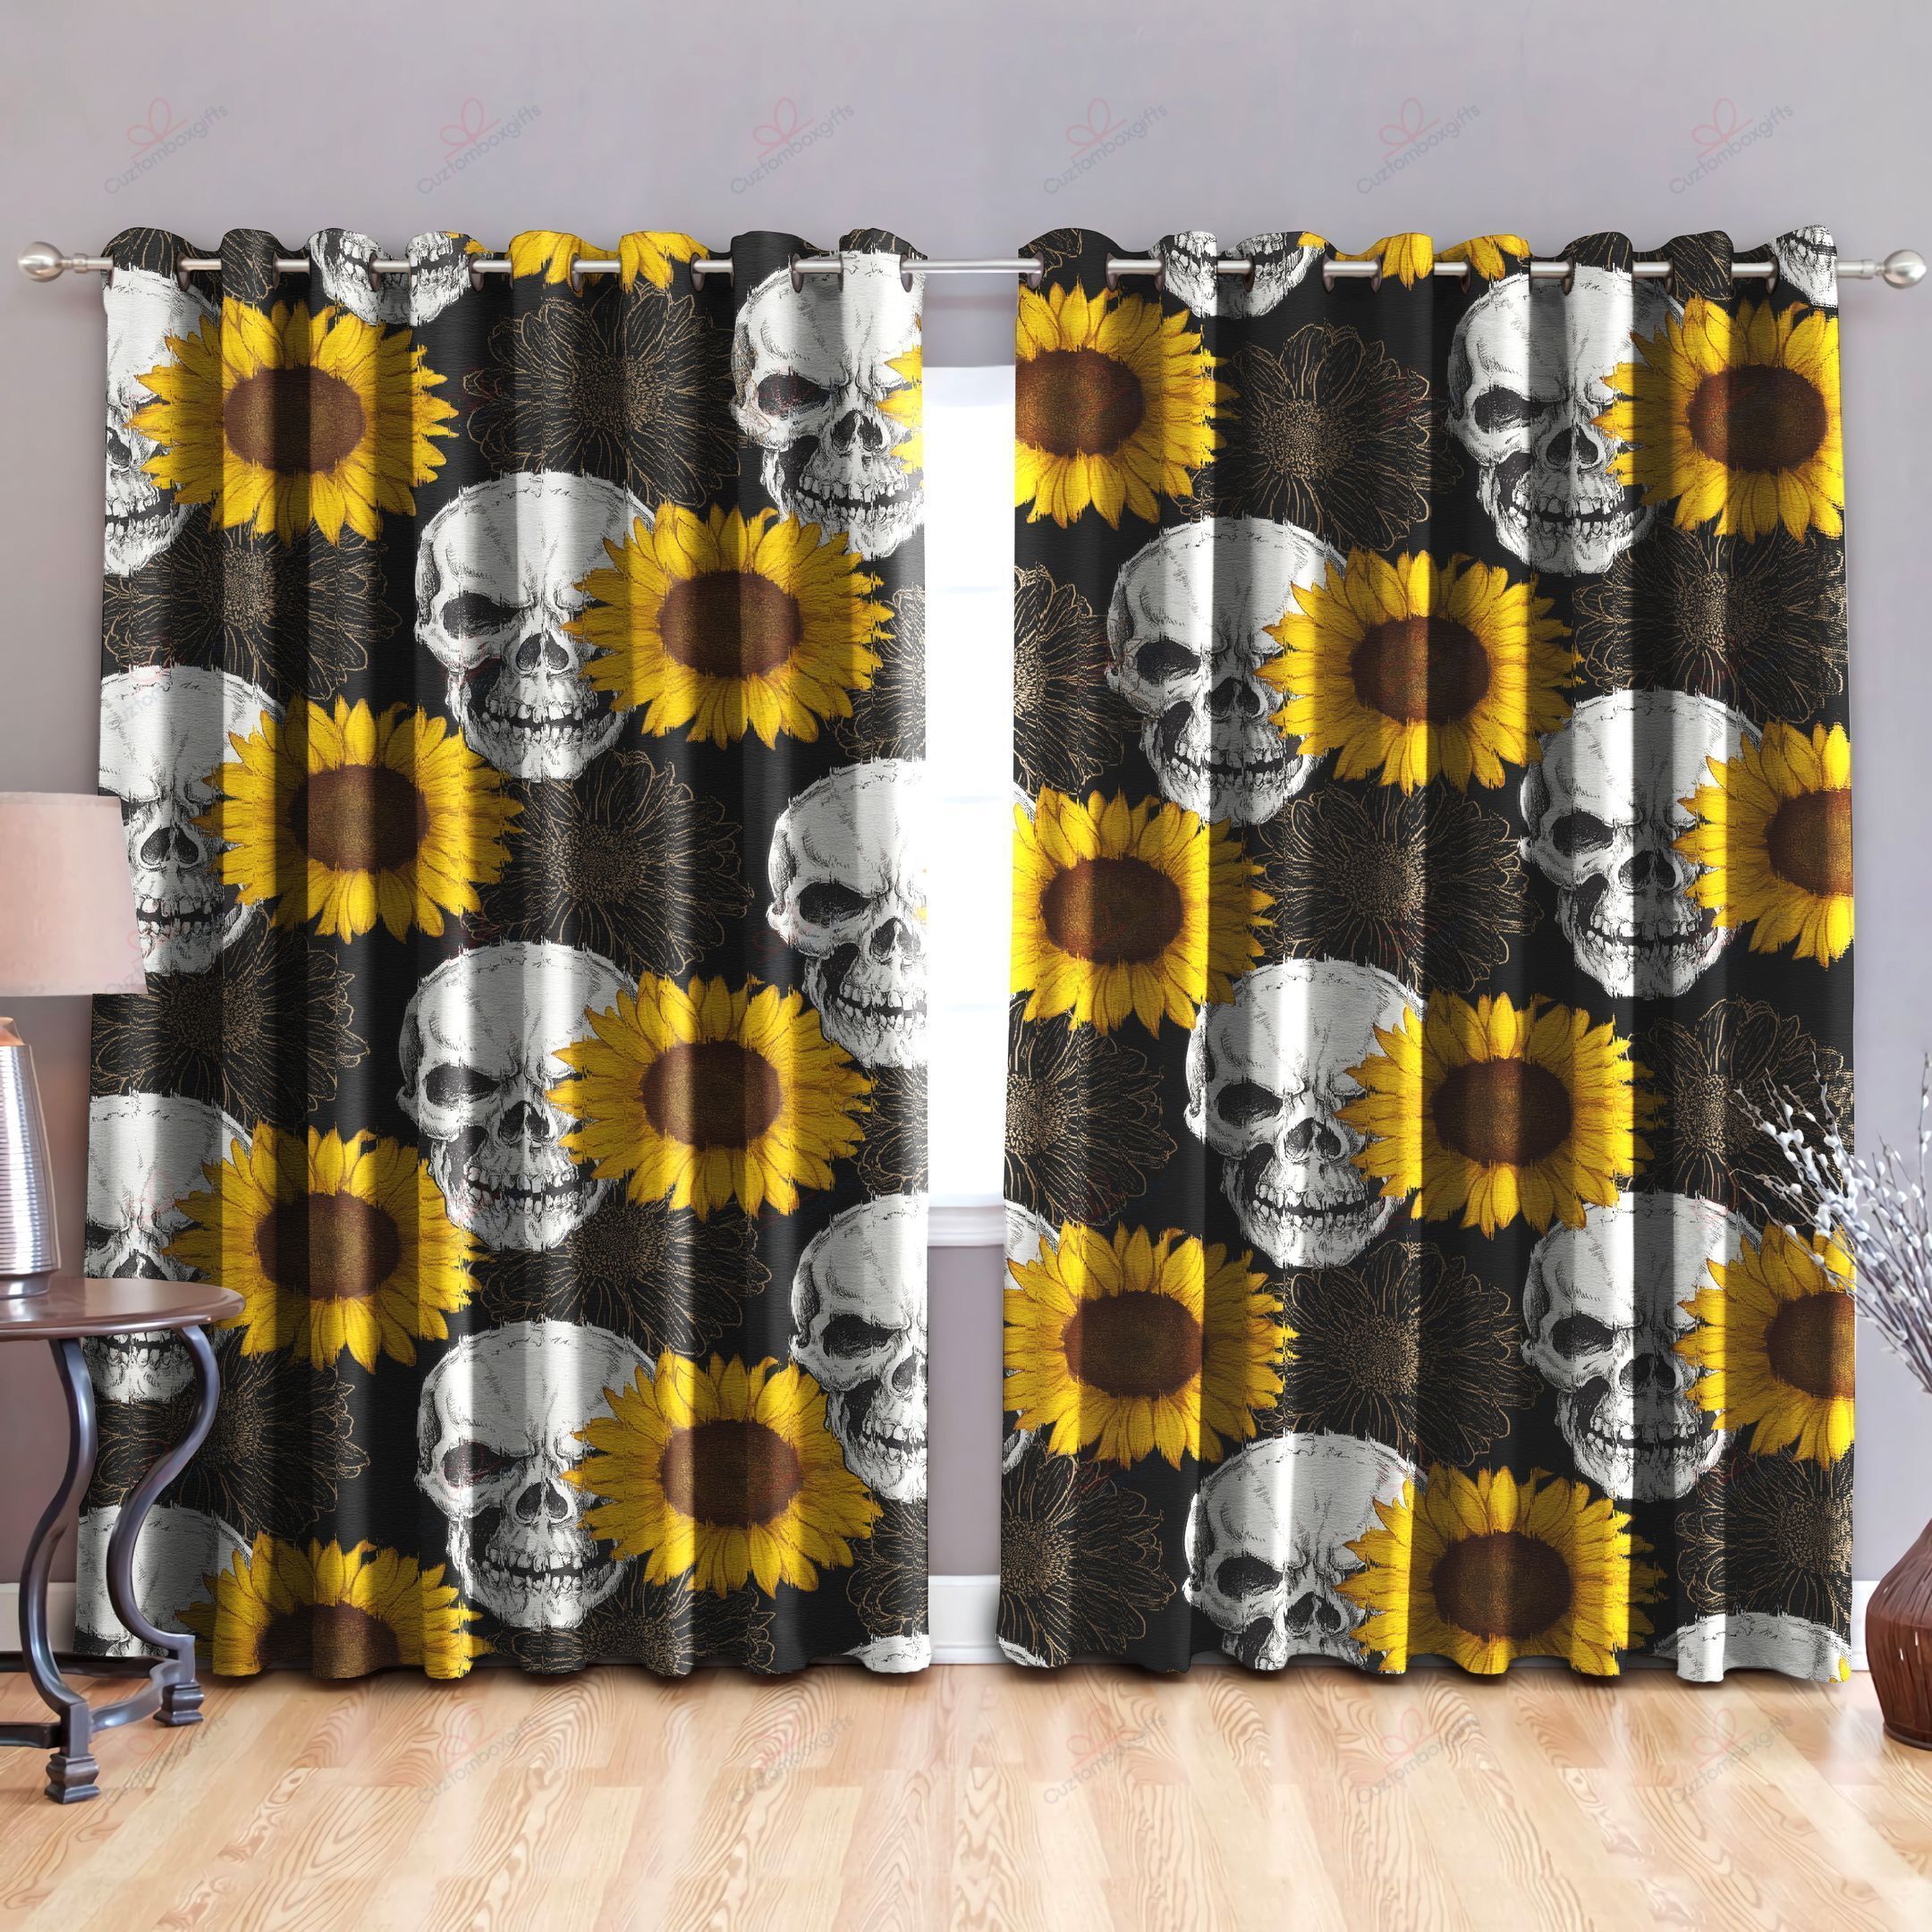 Skull Sunflowers The Dead Printed Window Curtain Home Decor